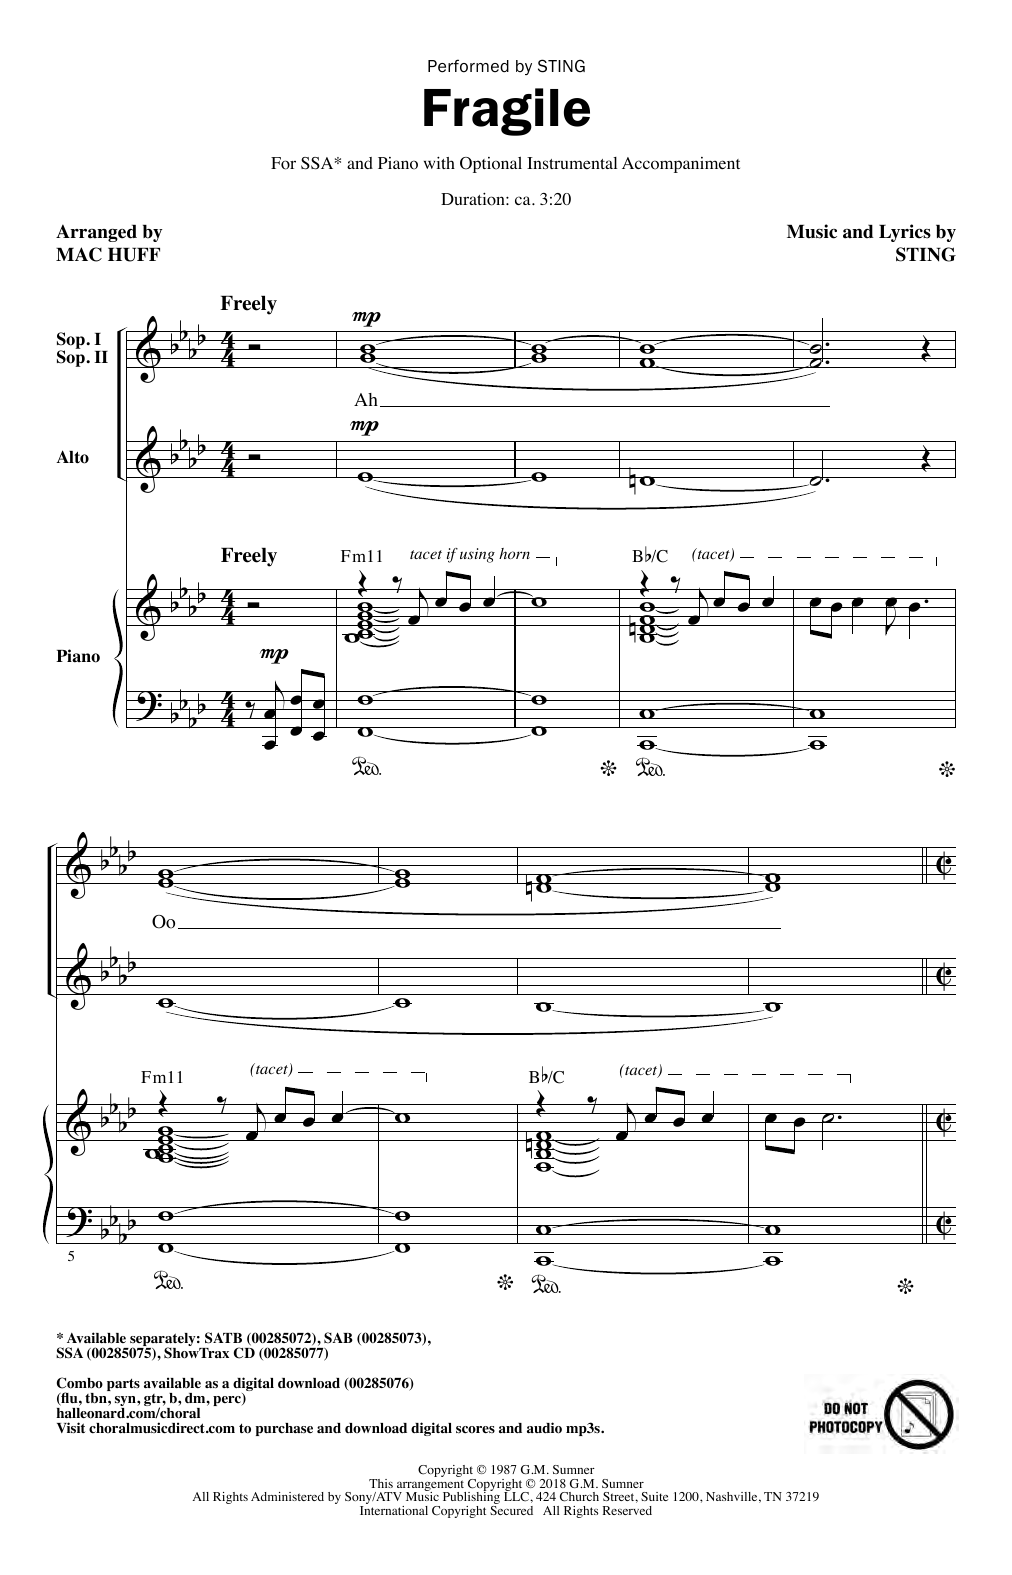 Sting Fragile (arr. Mac Huff) Sheet Music Notes & Chords for SAB Choir - Download or Print PDF